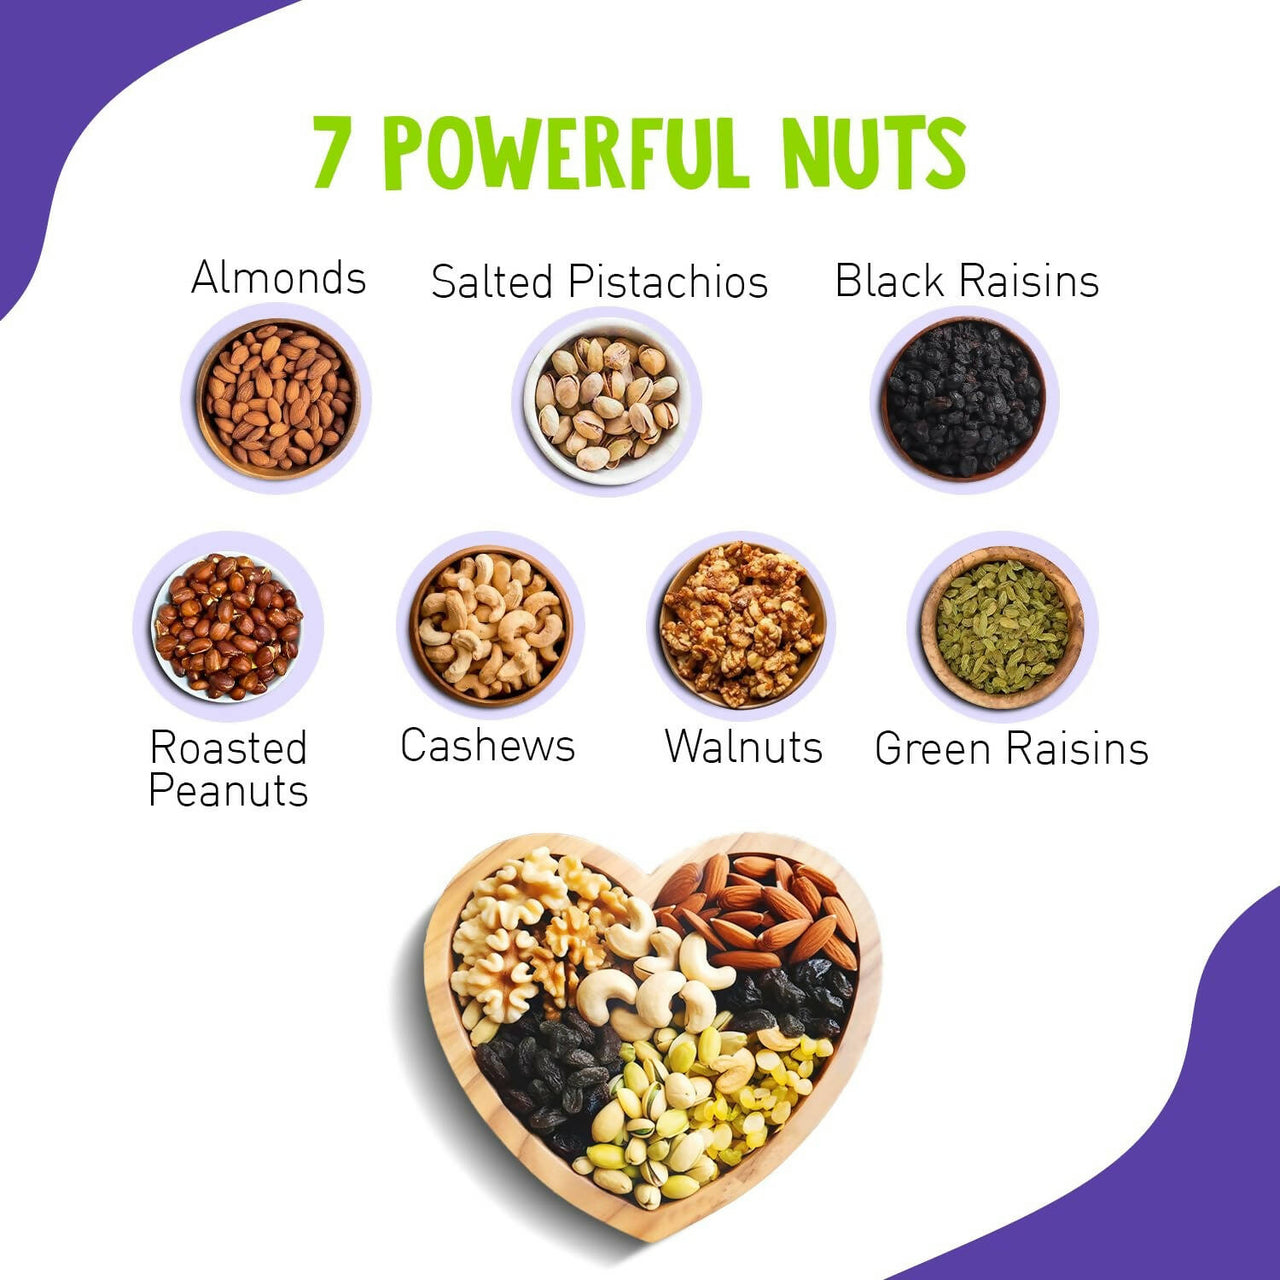 Alpino 7-in-1 Super Nuts Health Trial Mix - Distacart